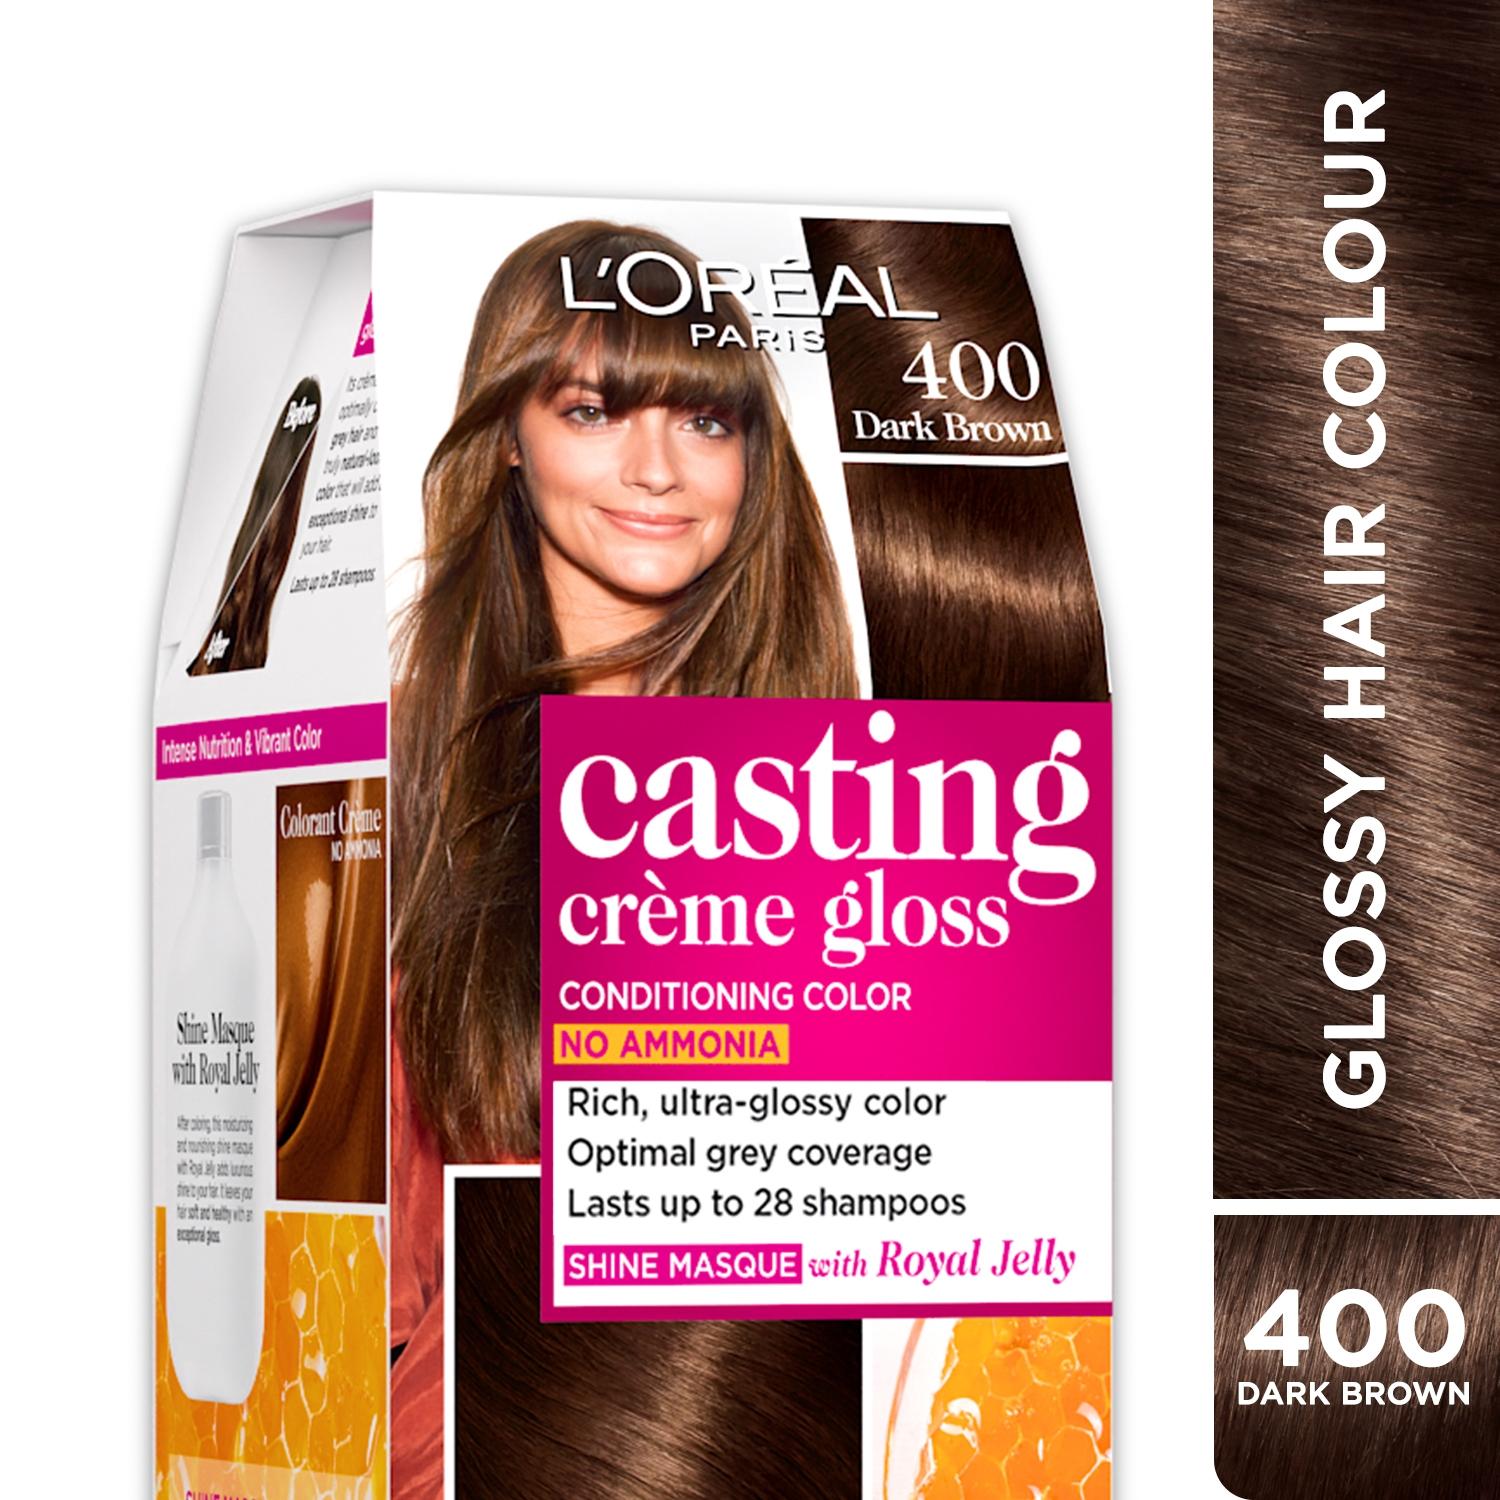 l'oreal paris casting creme gloss hair color - 400 dark brown (87.5g+72ml)